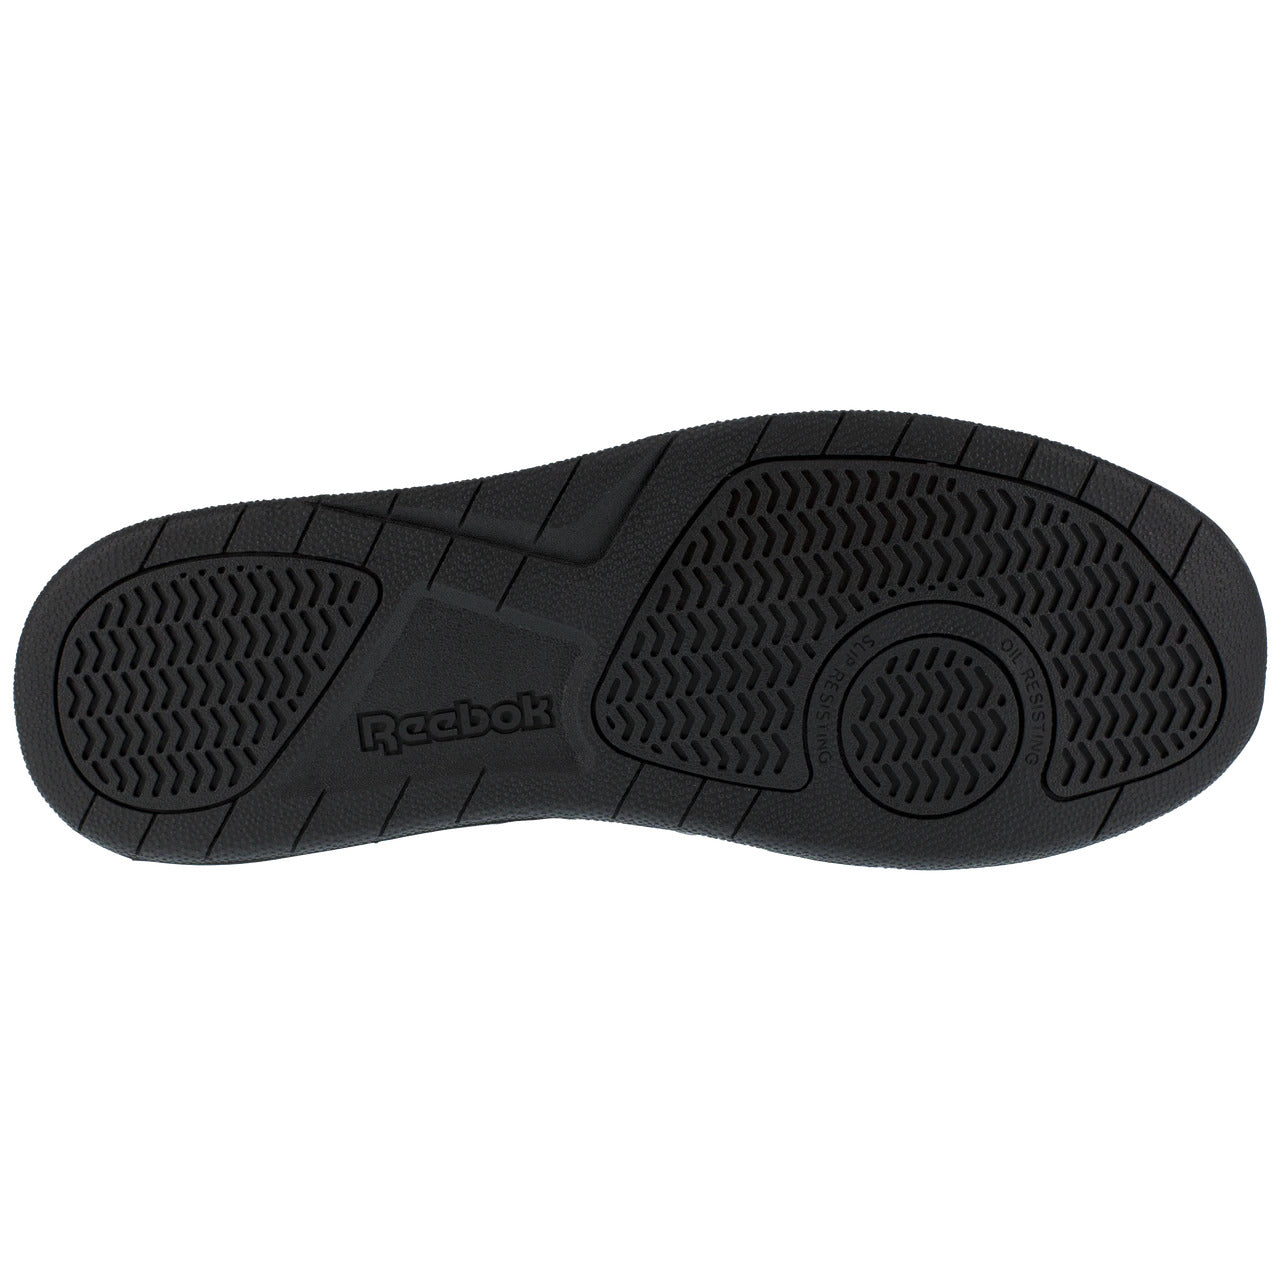 RB4162 Men's Low Cut Composite Toe  Work Sneaker (Black/White)